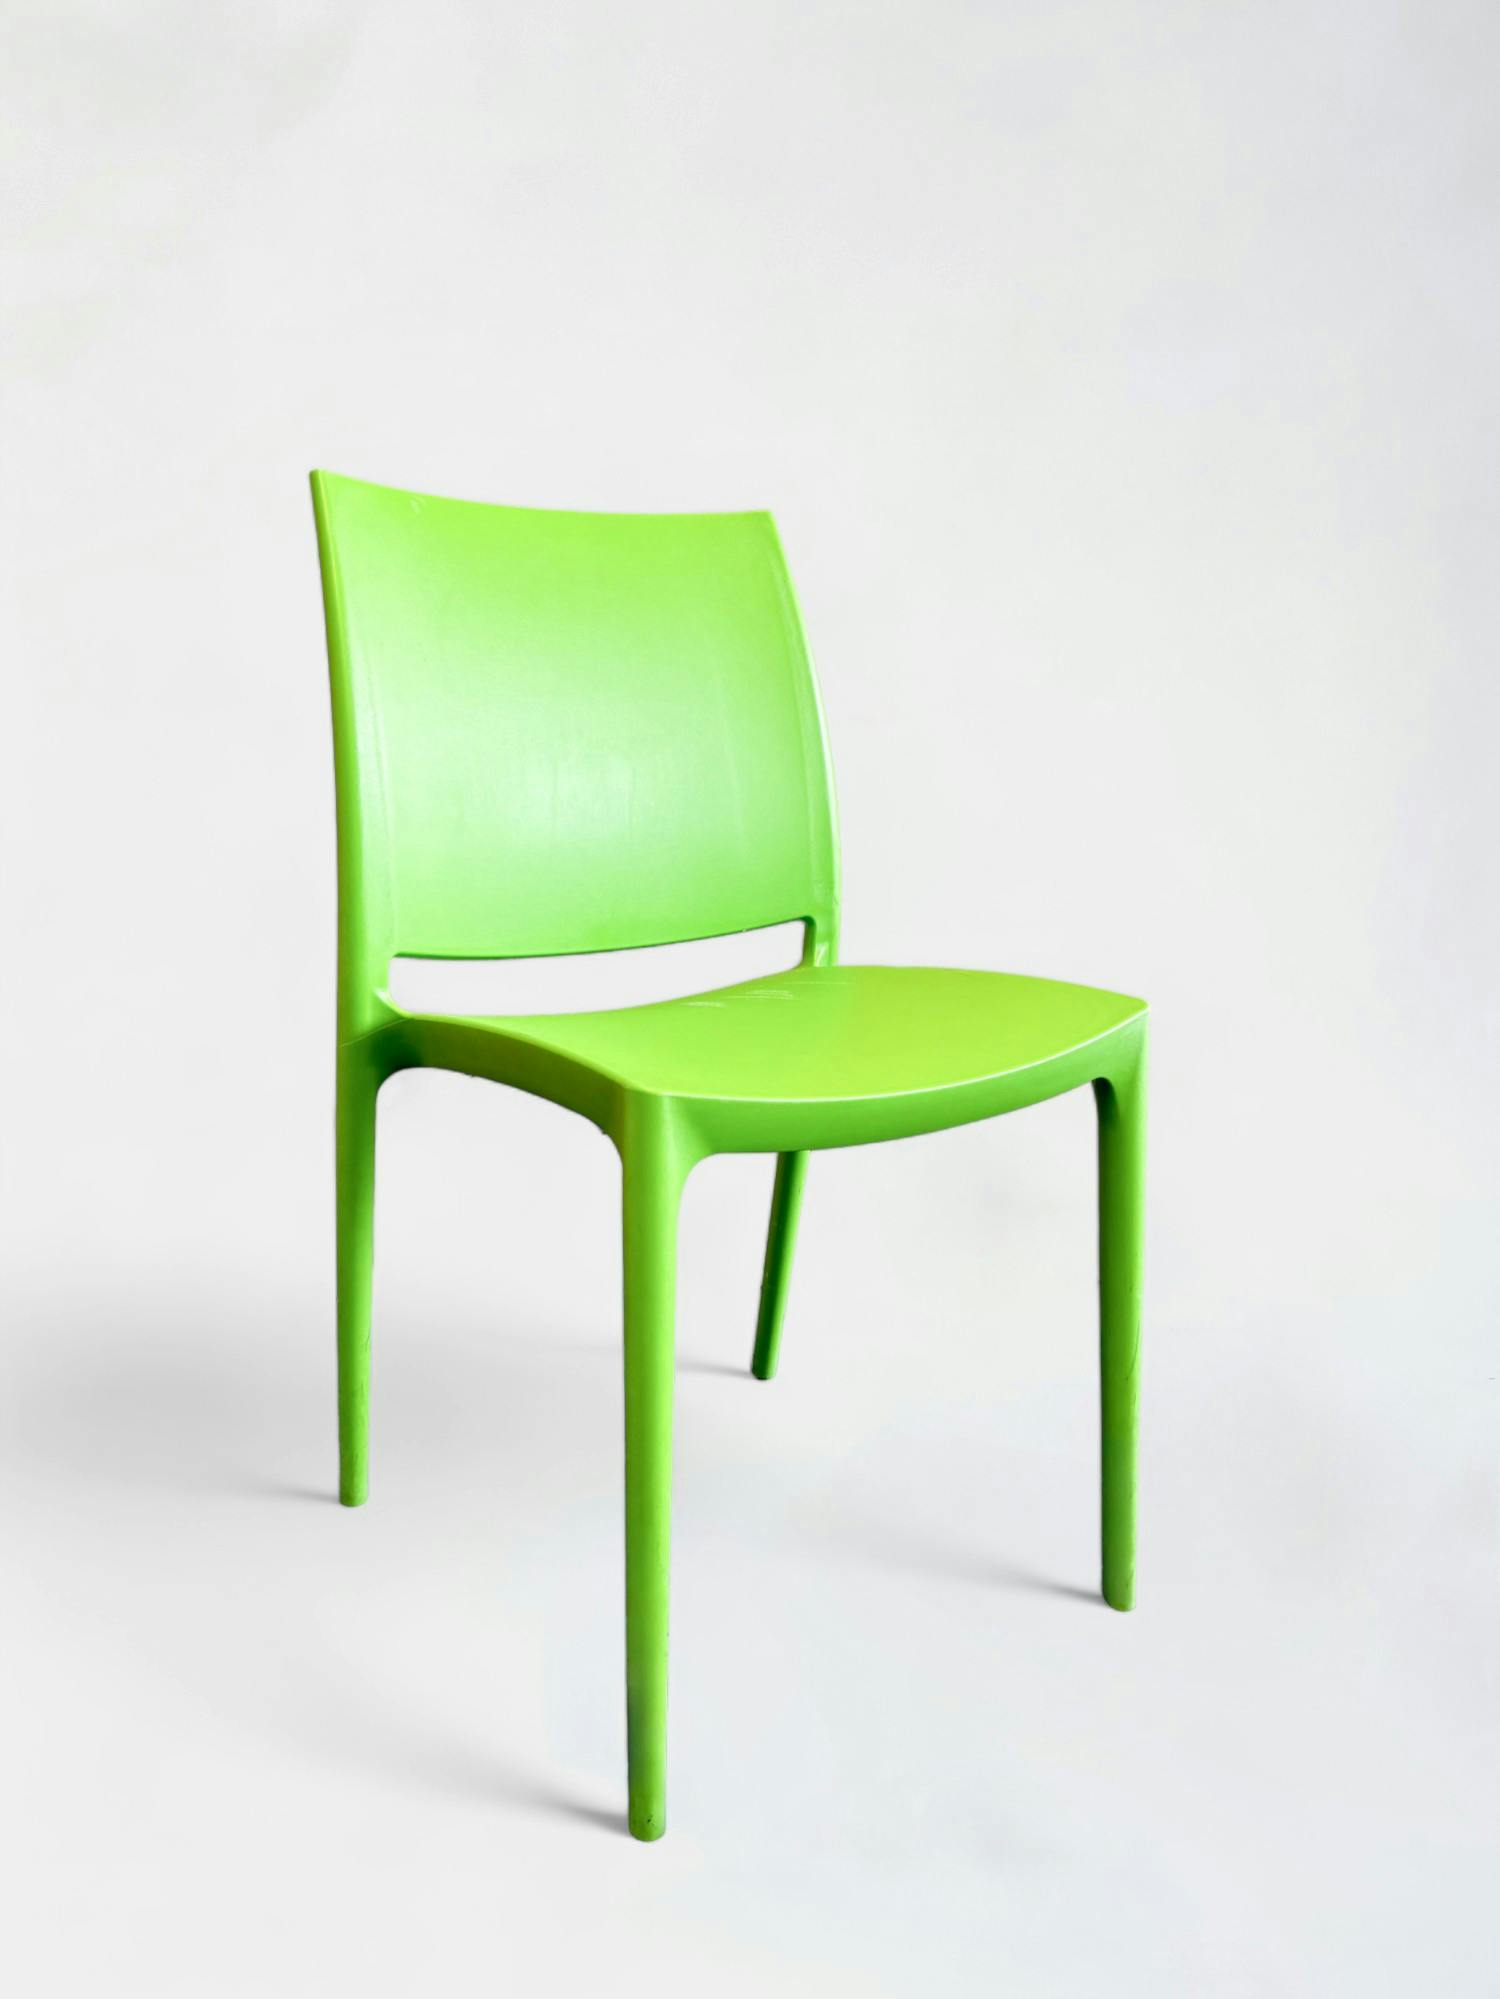 Chaise empilable en plastique vert tilleul Siesta au design moderne - Relieve Furniture